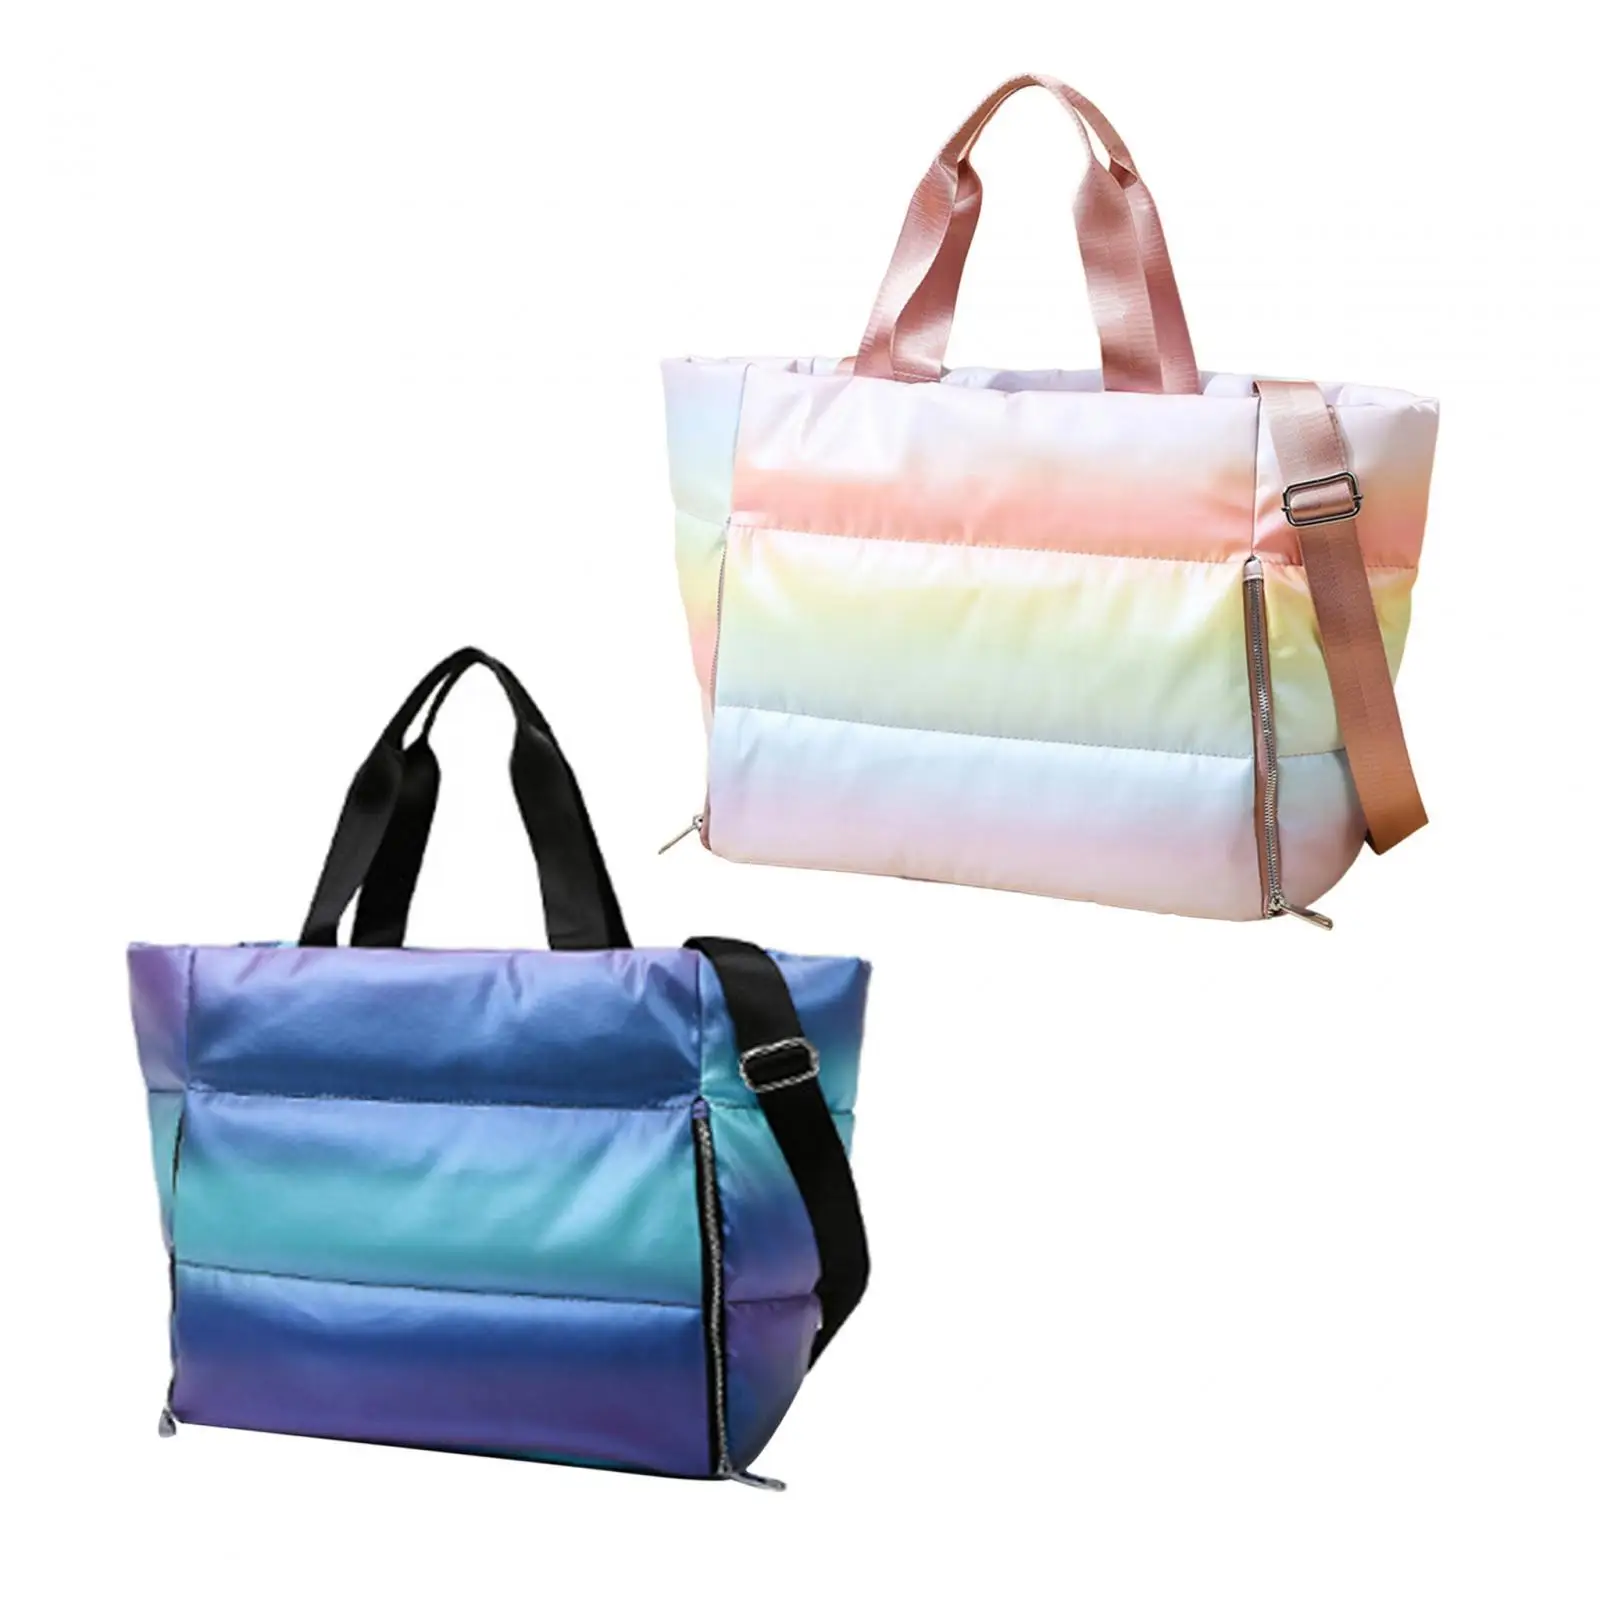 Sports Gym Bag Yoga Bag Travel Duffel Bag Versatile Shopping Handbag with Wet Pocket Weekender Bag for Sport Outdoor Activities